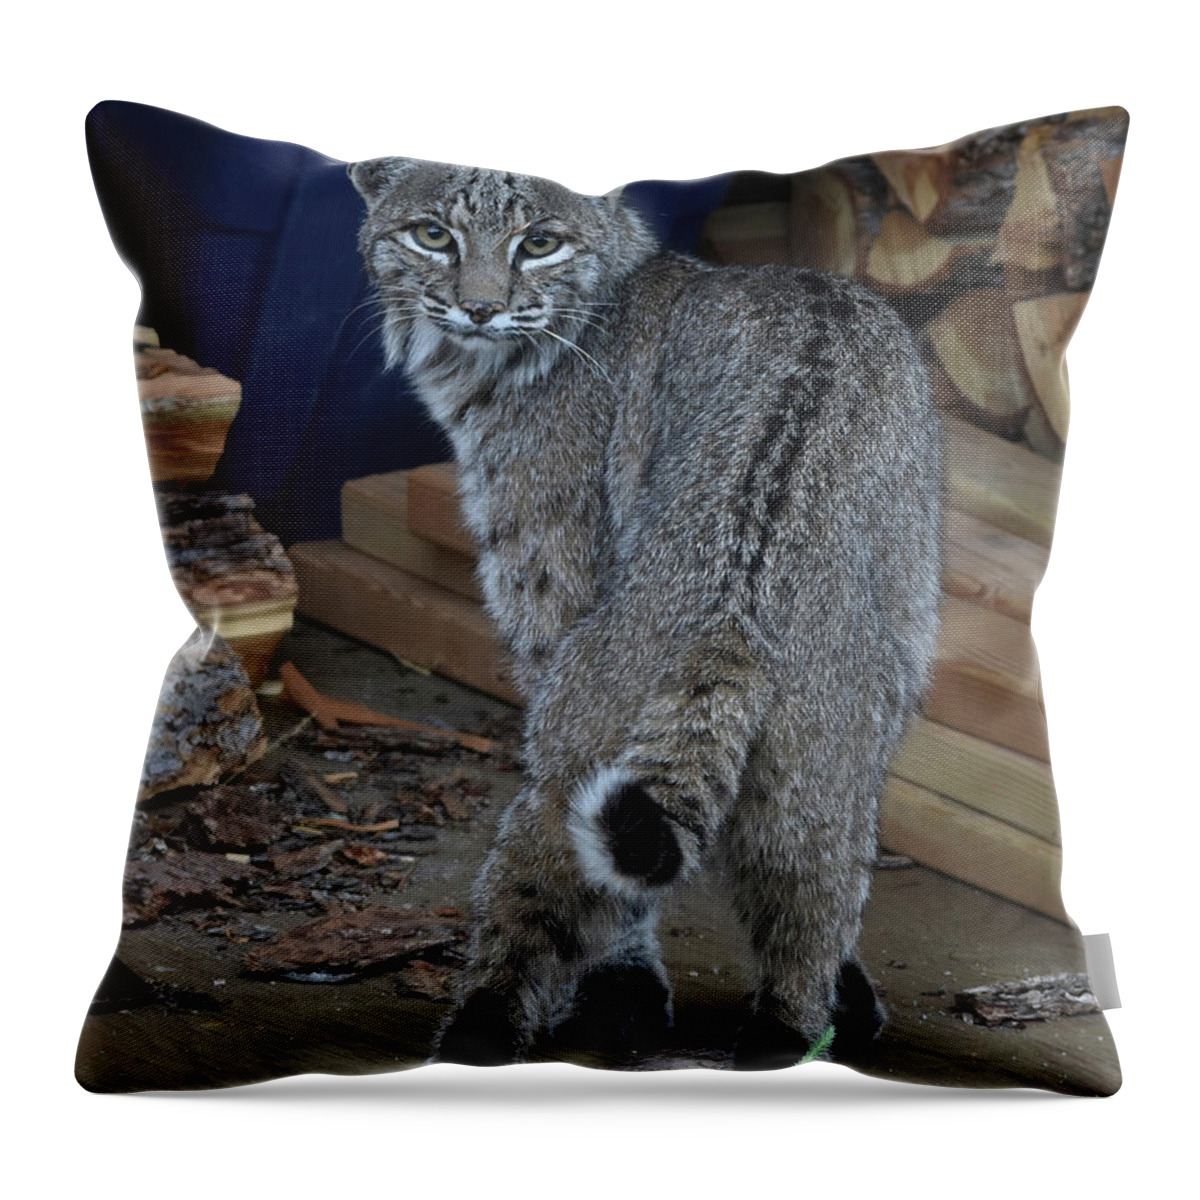 Bobcat Throw Pillow featuring the photograph Bobcat by Ben Foster